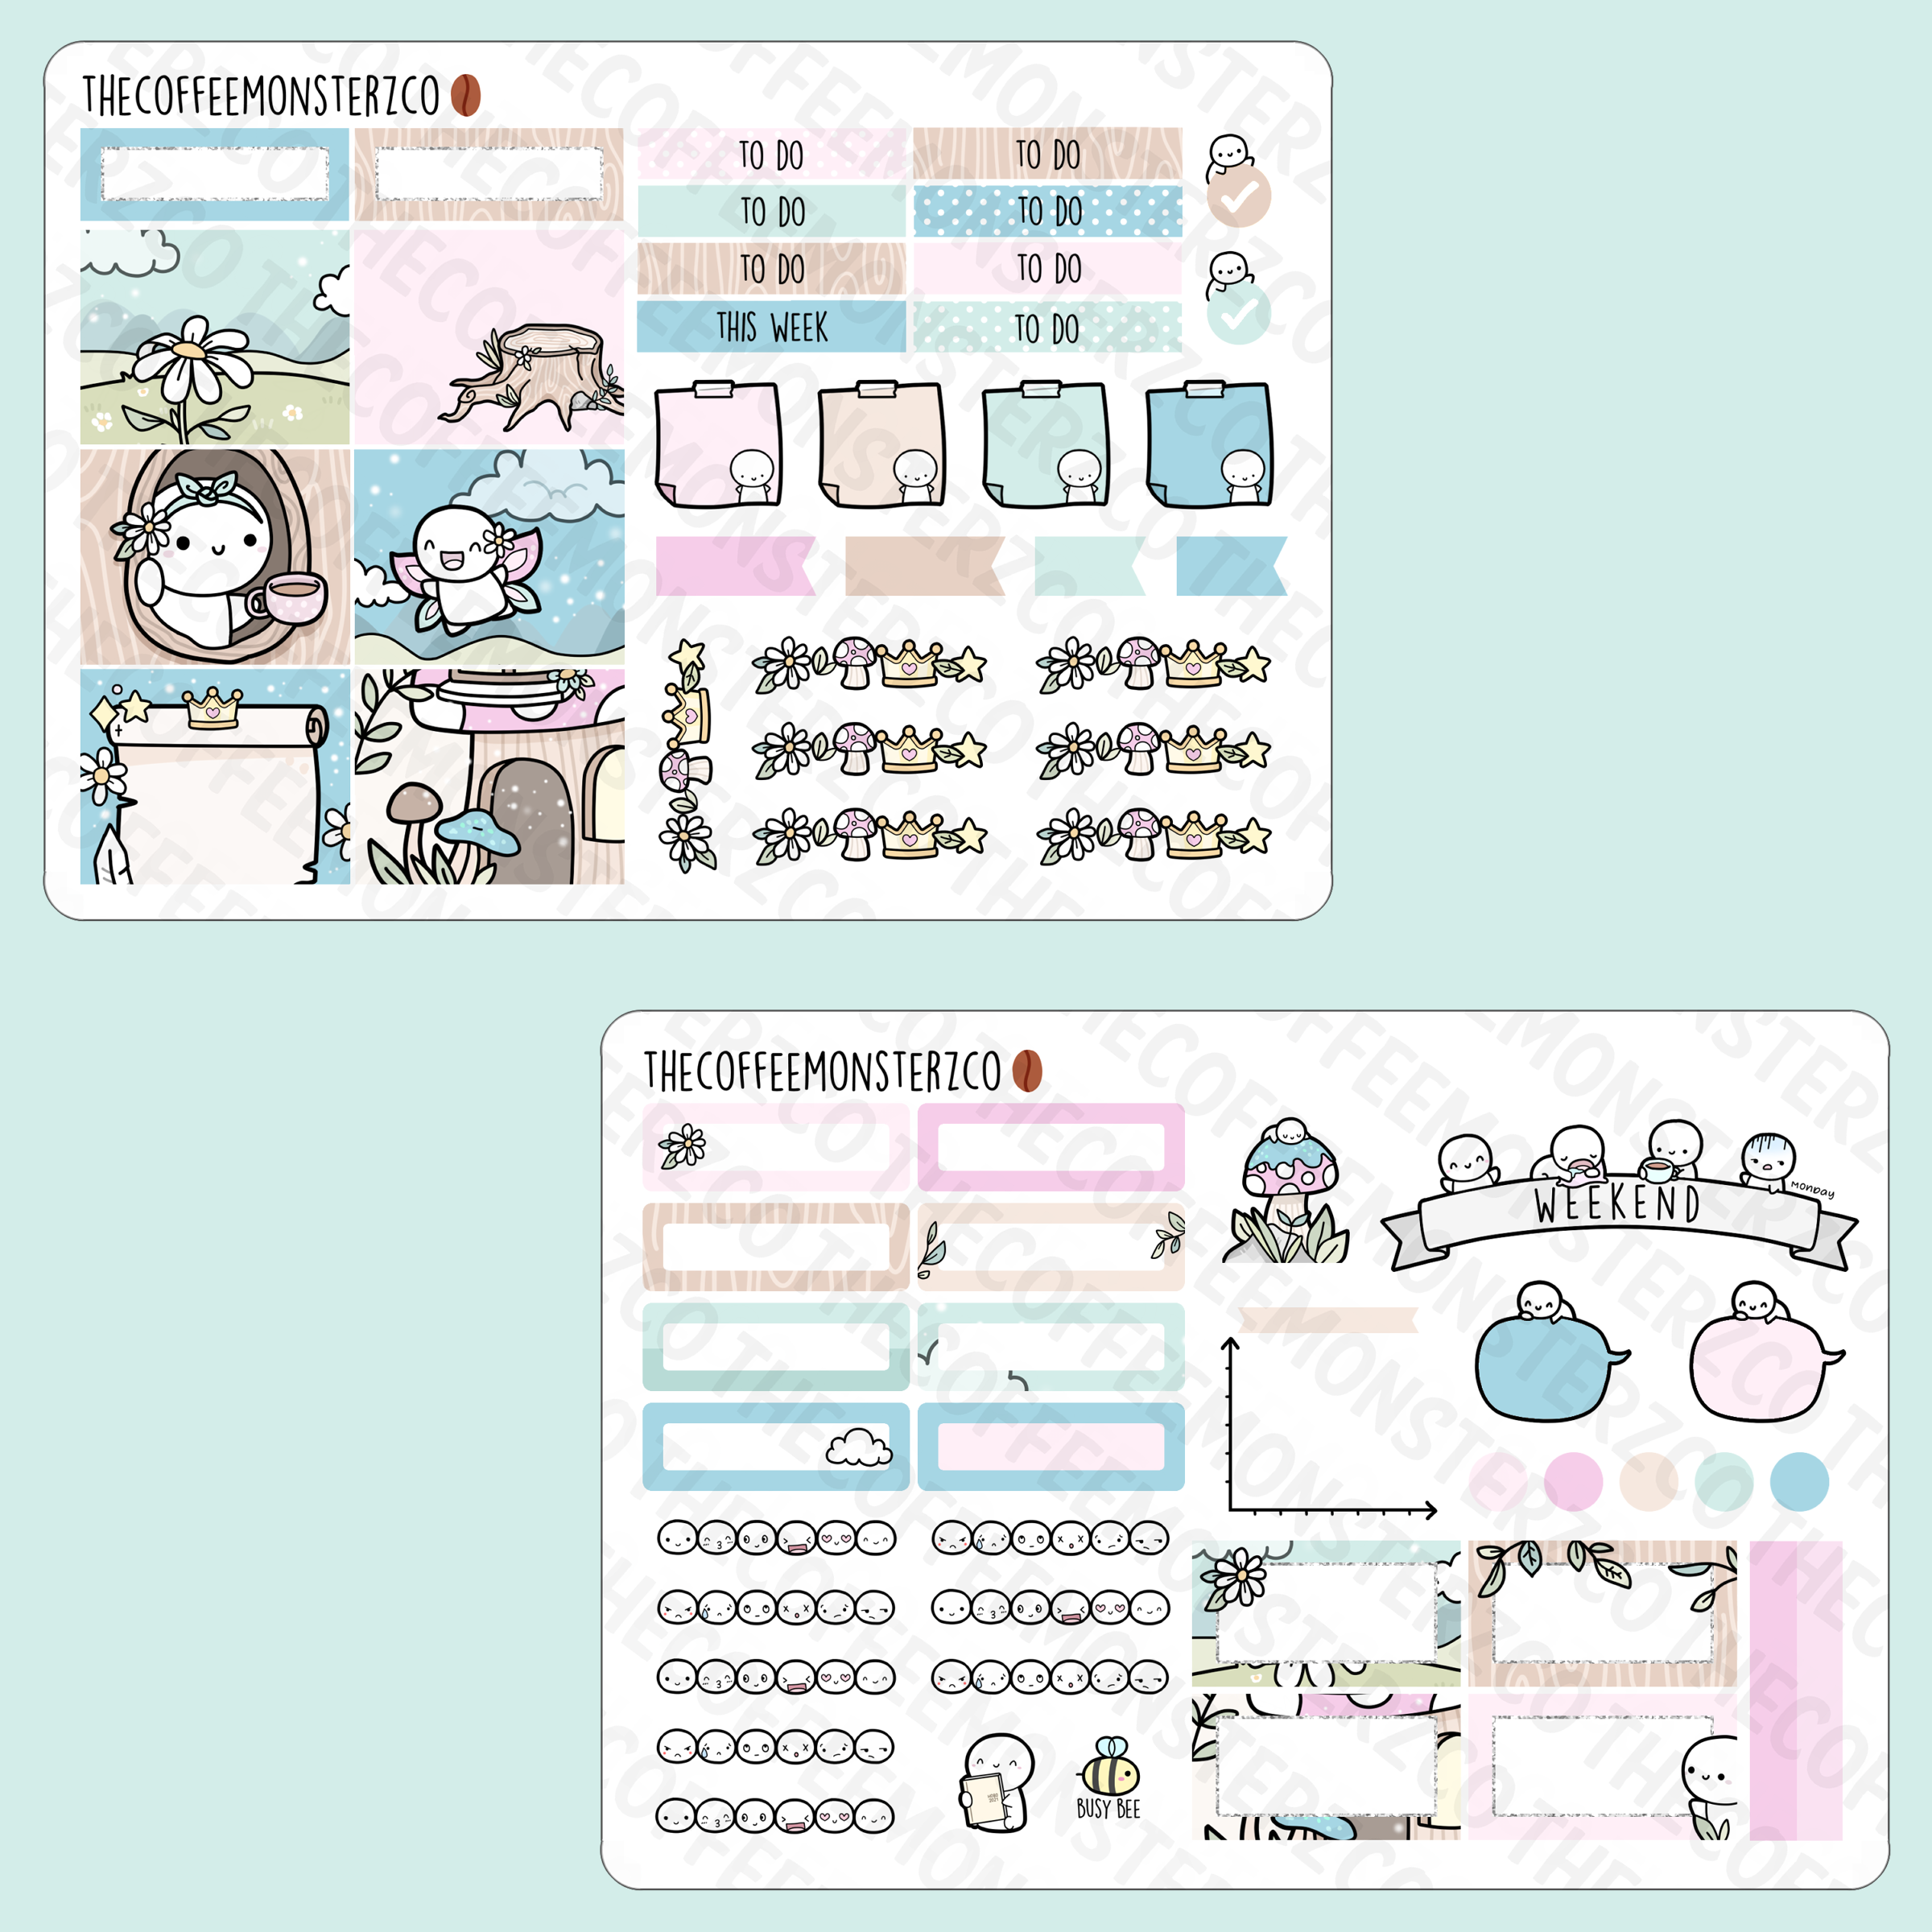 Bookish Hobonichi Cousin Kit Planner Stickers